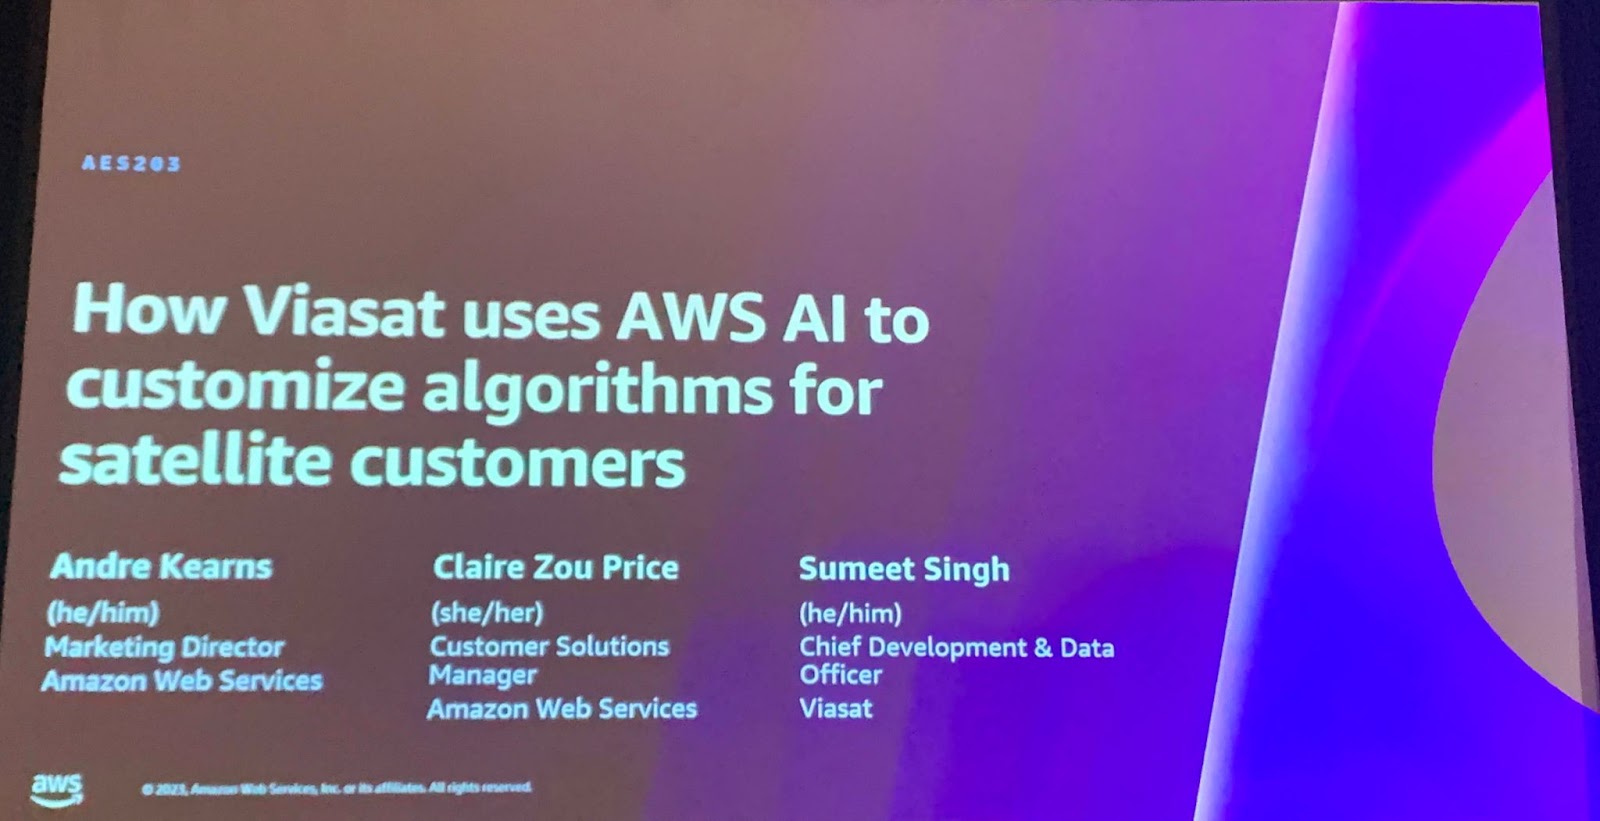 How Viasat uses AWS AI to customize algorithms for satellite customers